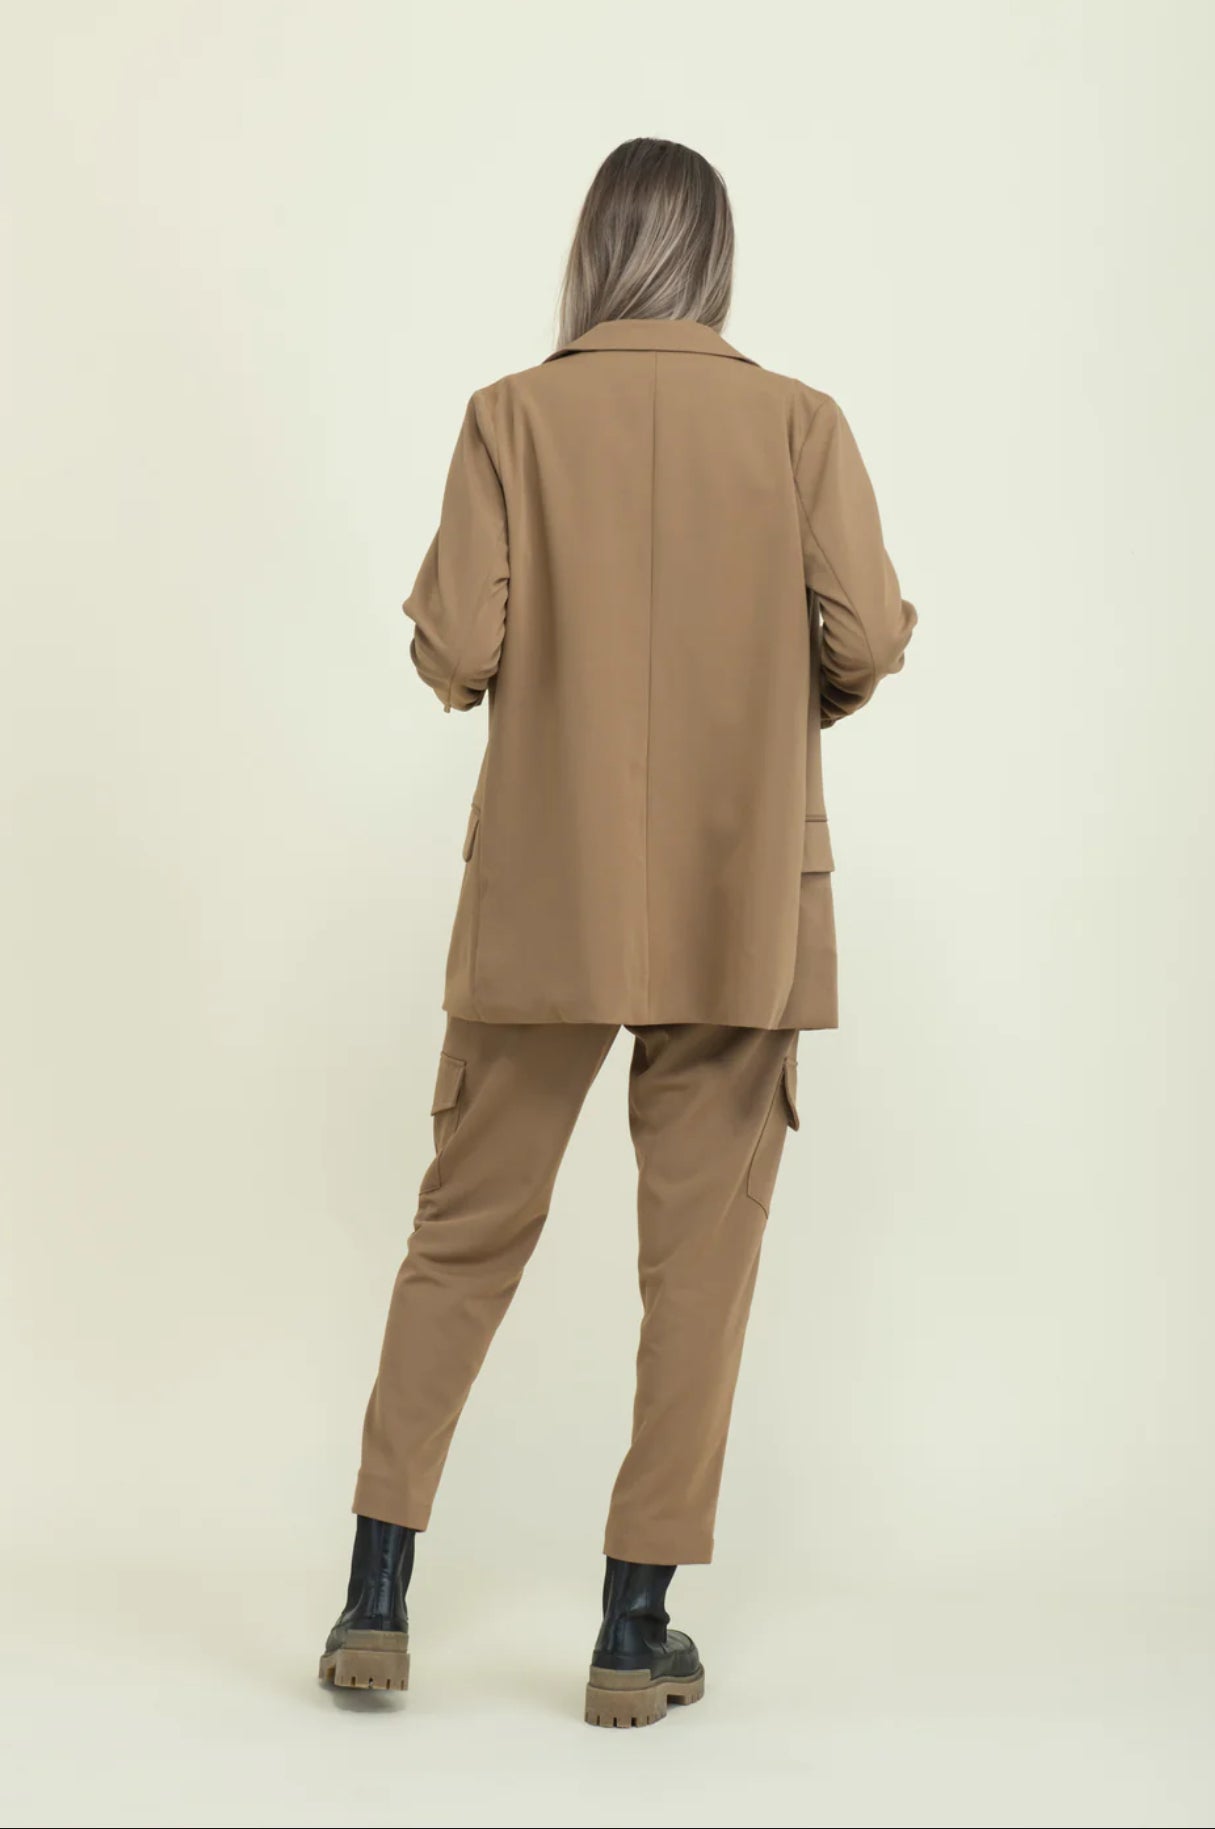 Emma oversized lined blazer by Orb - camel - Blue Sky Fashions & Lingerie